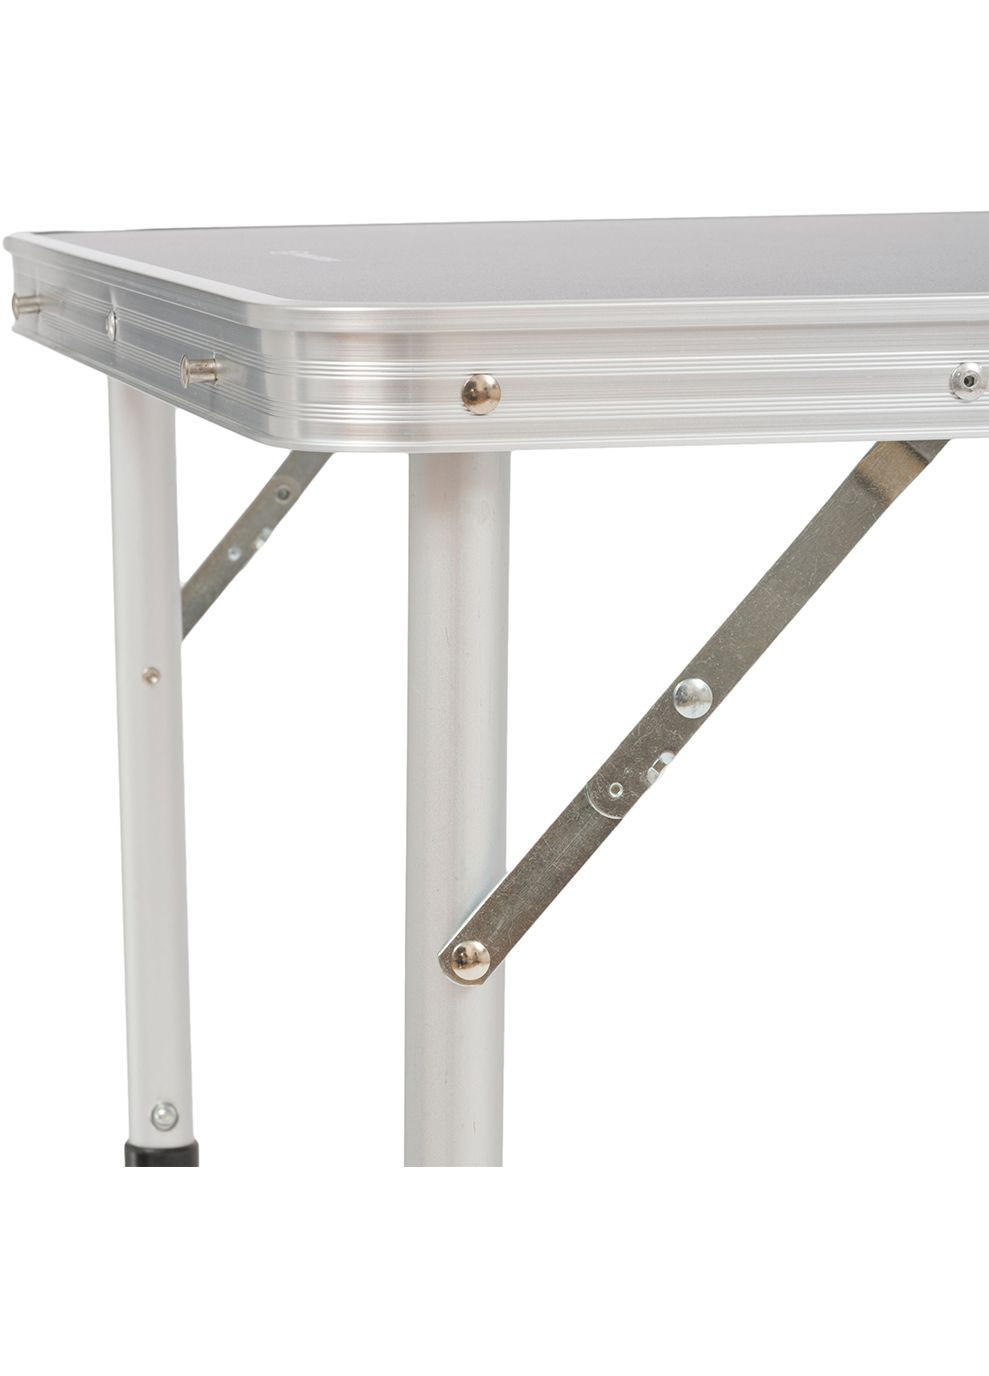 Стол раскладной Compact Folding Table Double Grey Highlander (268831756)